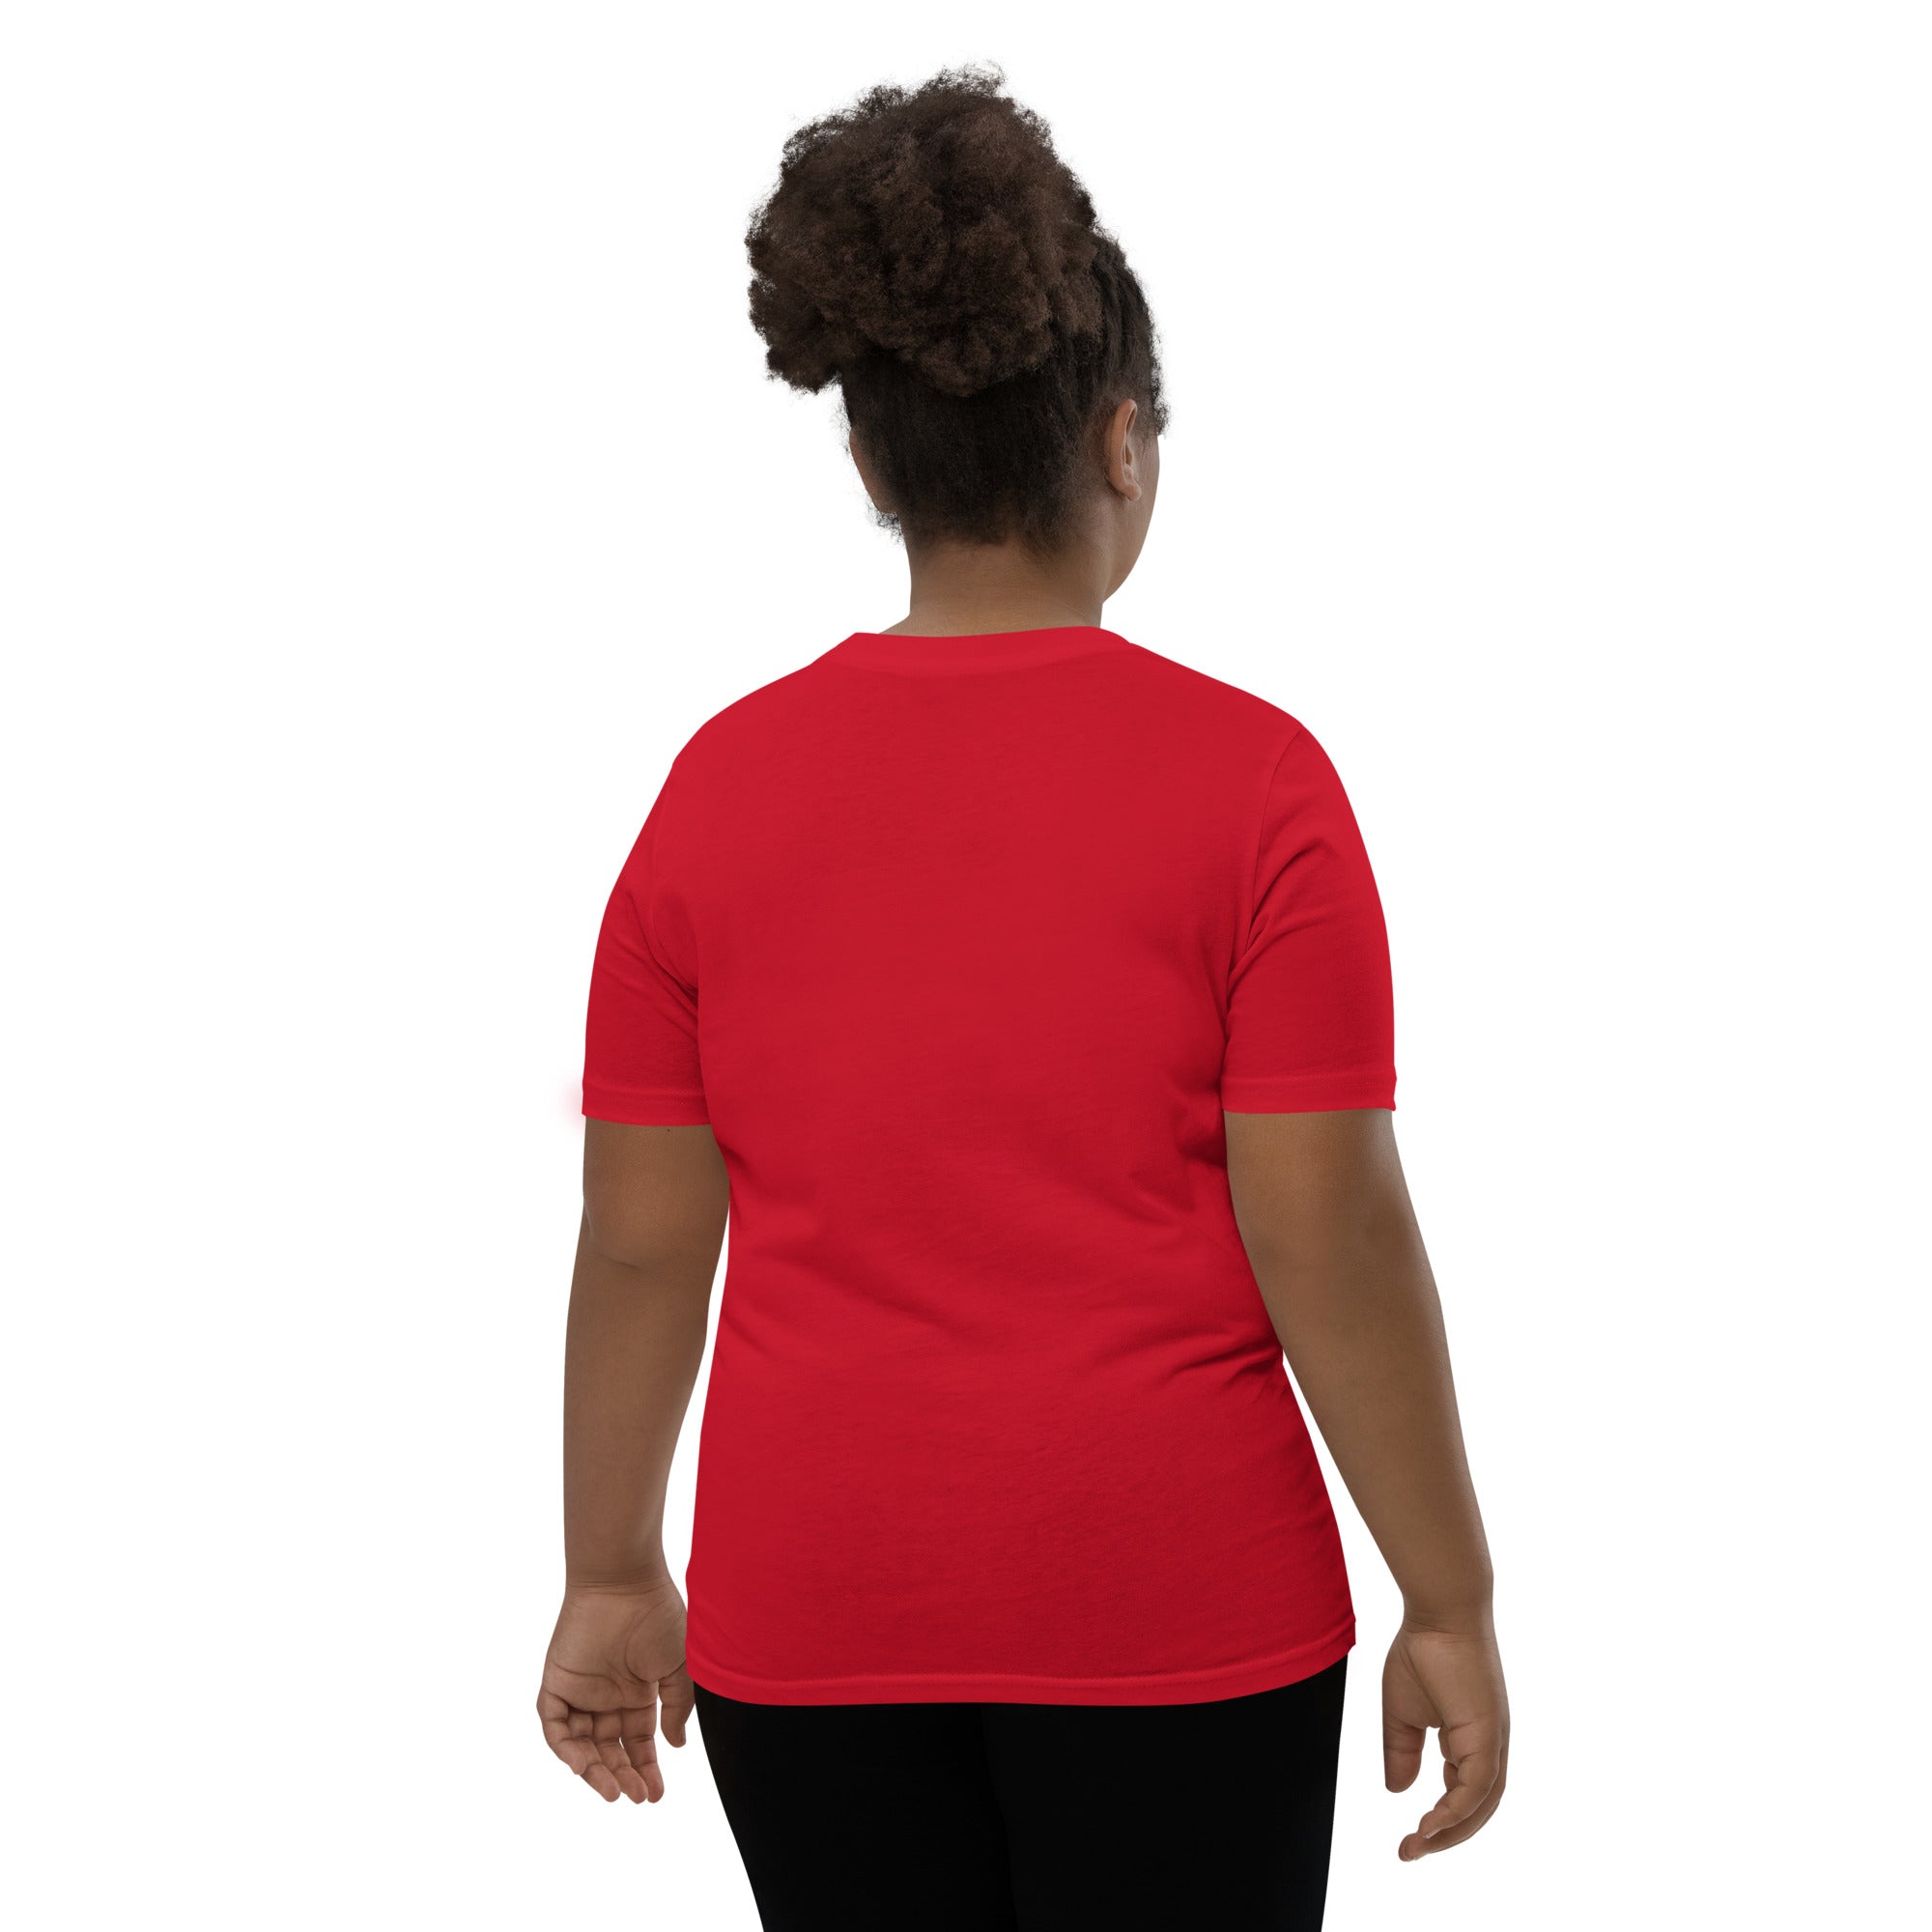 Frisco Logo W - Red Youth Short Sleeve T-Shirt